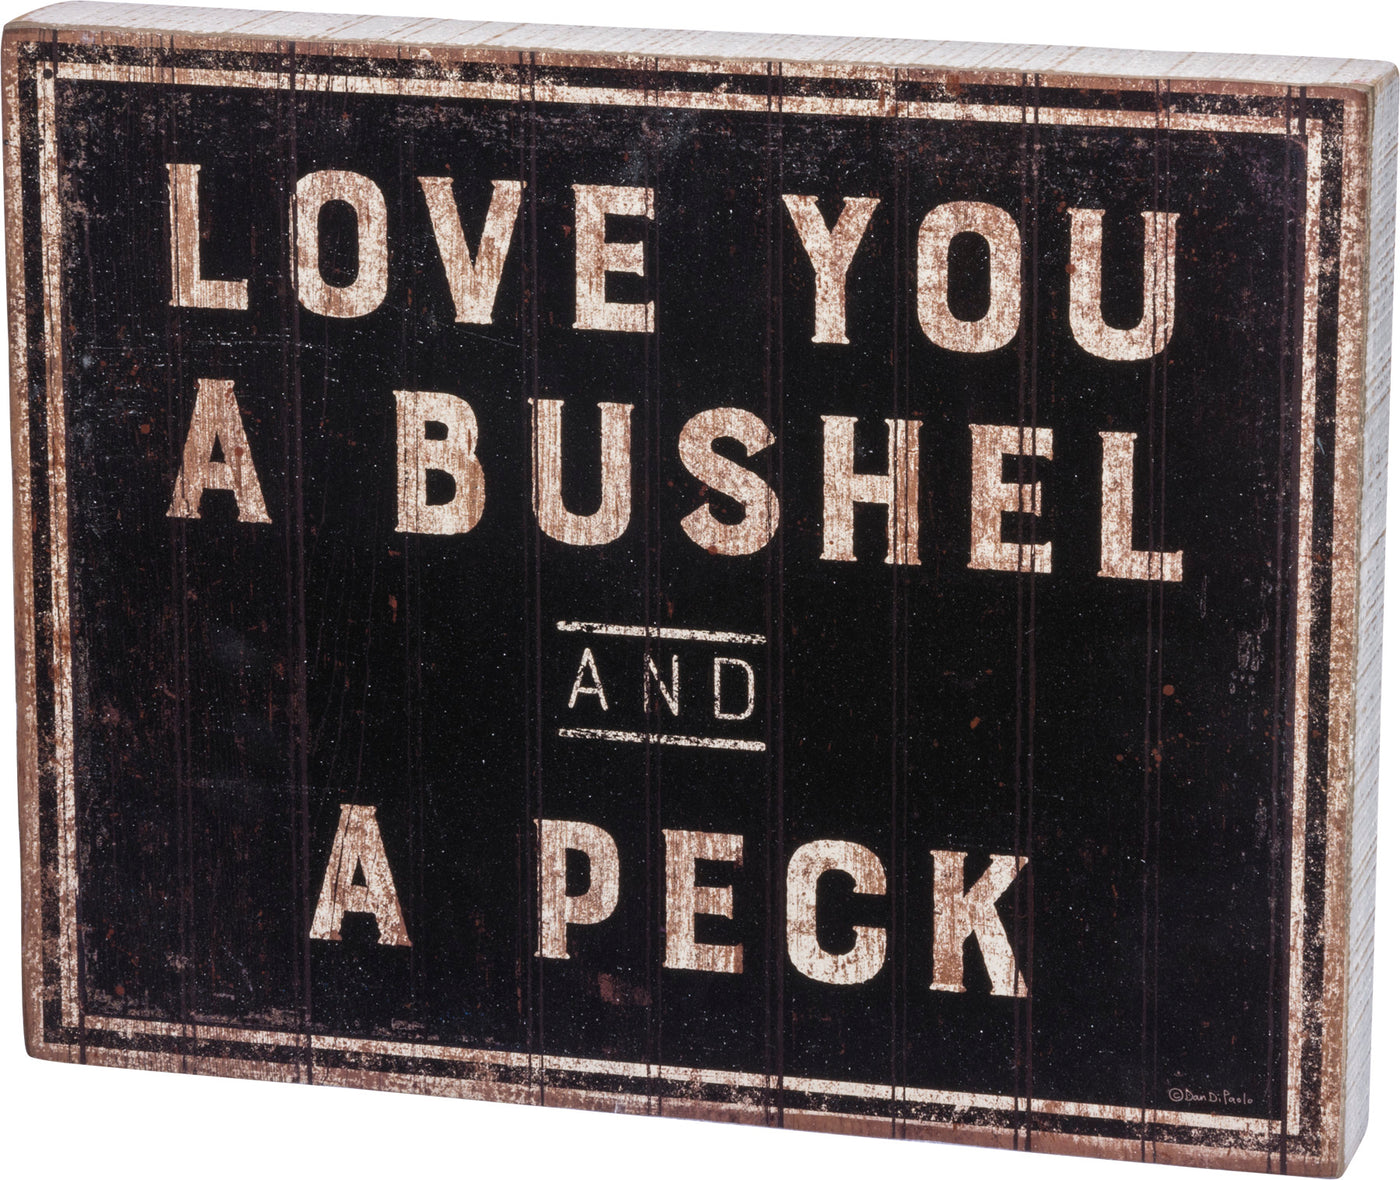 Love You A Bushel And A Peck Box Sign